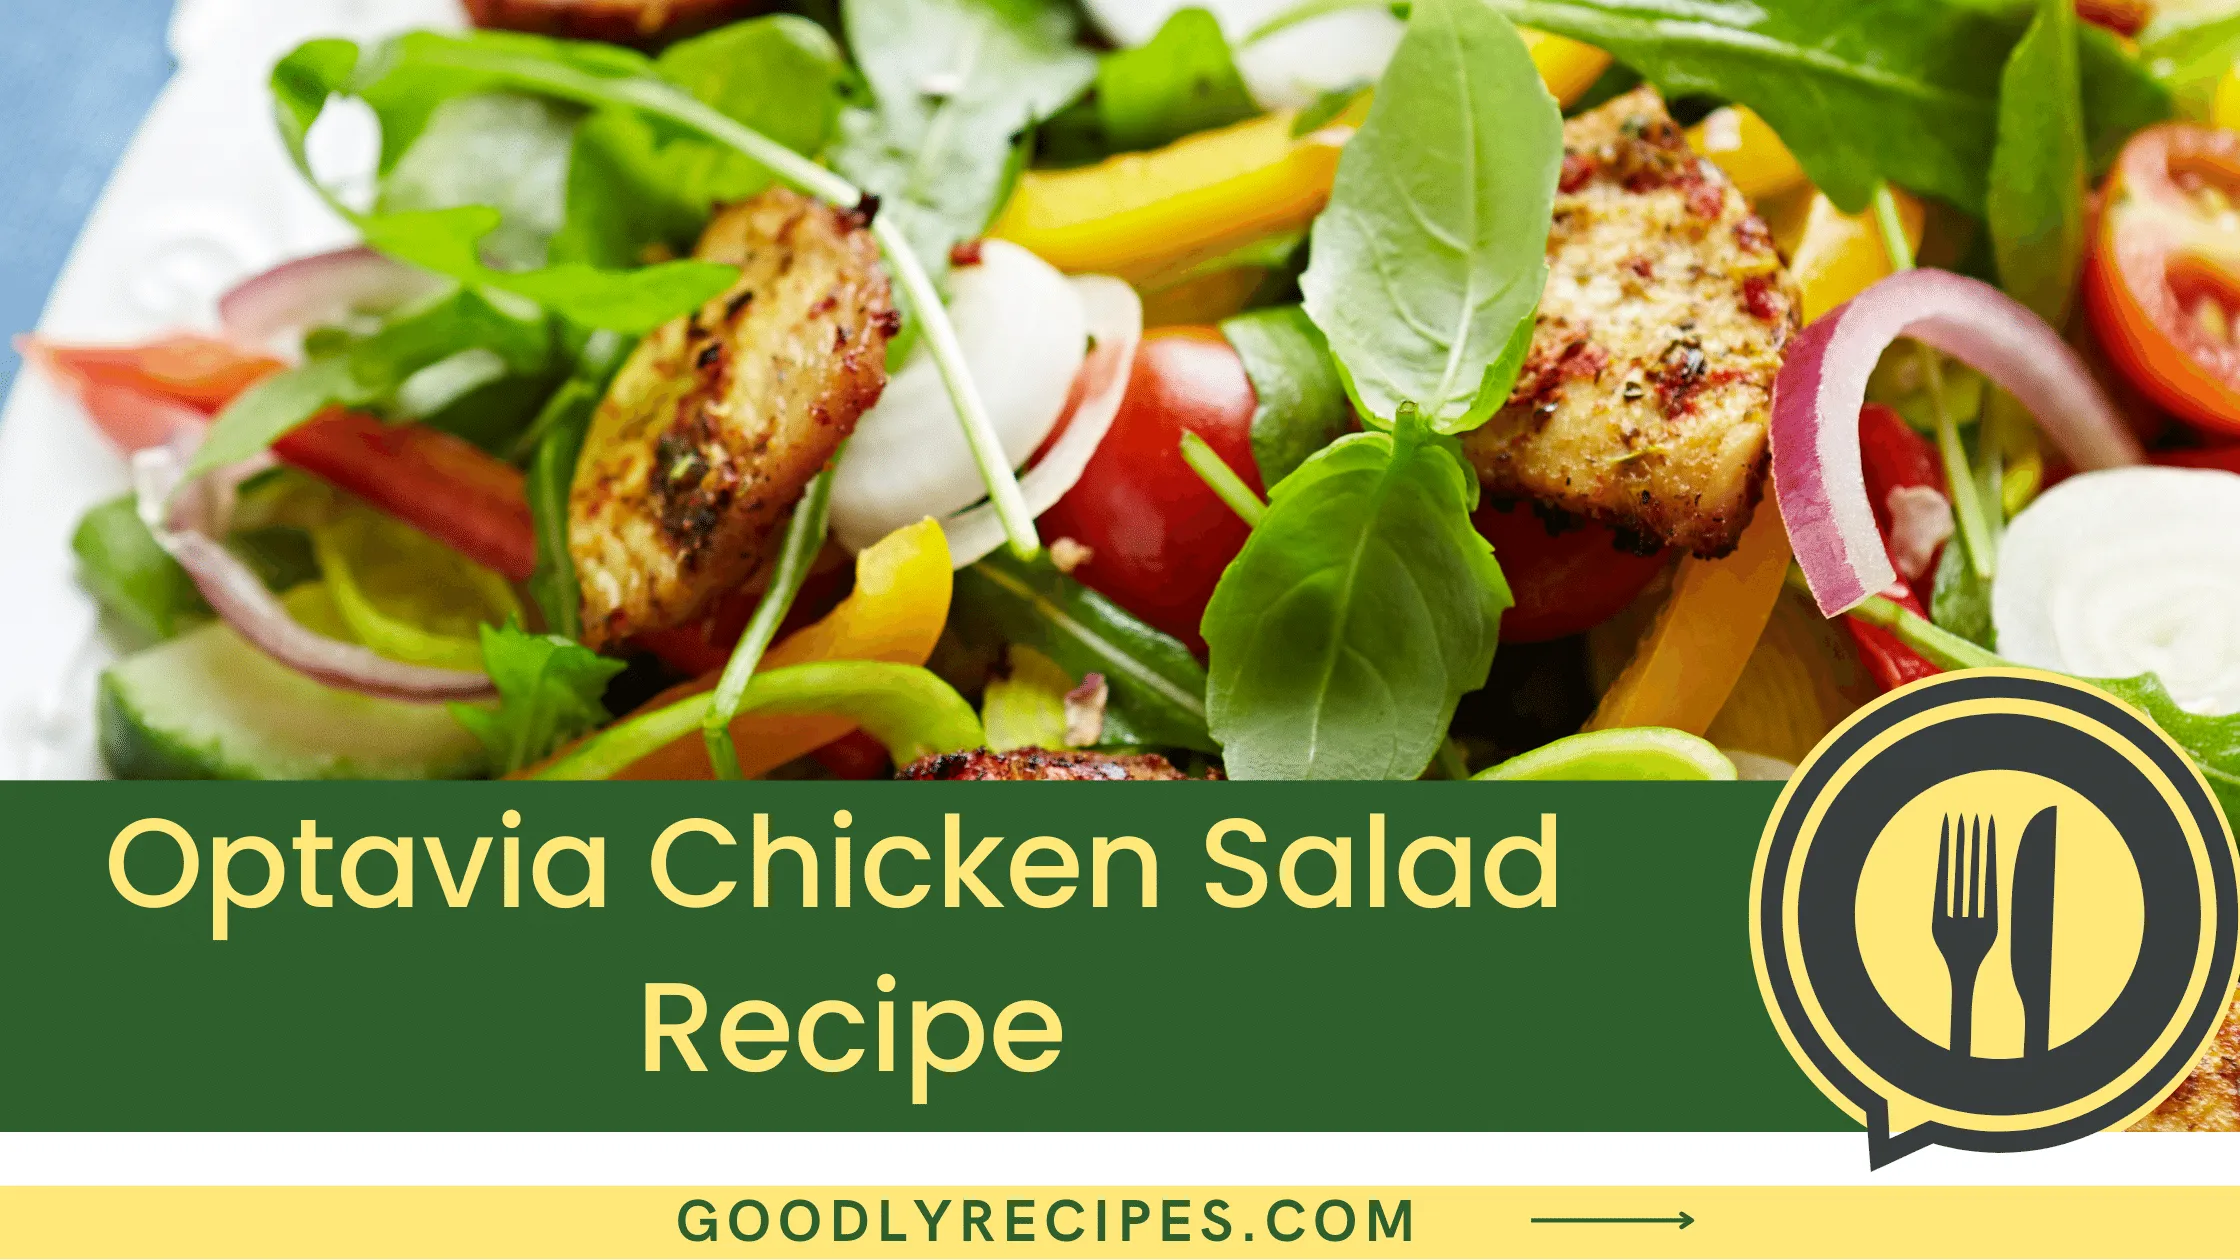 What is Optavia Chicken Salad?